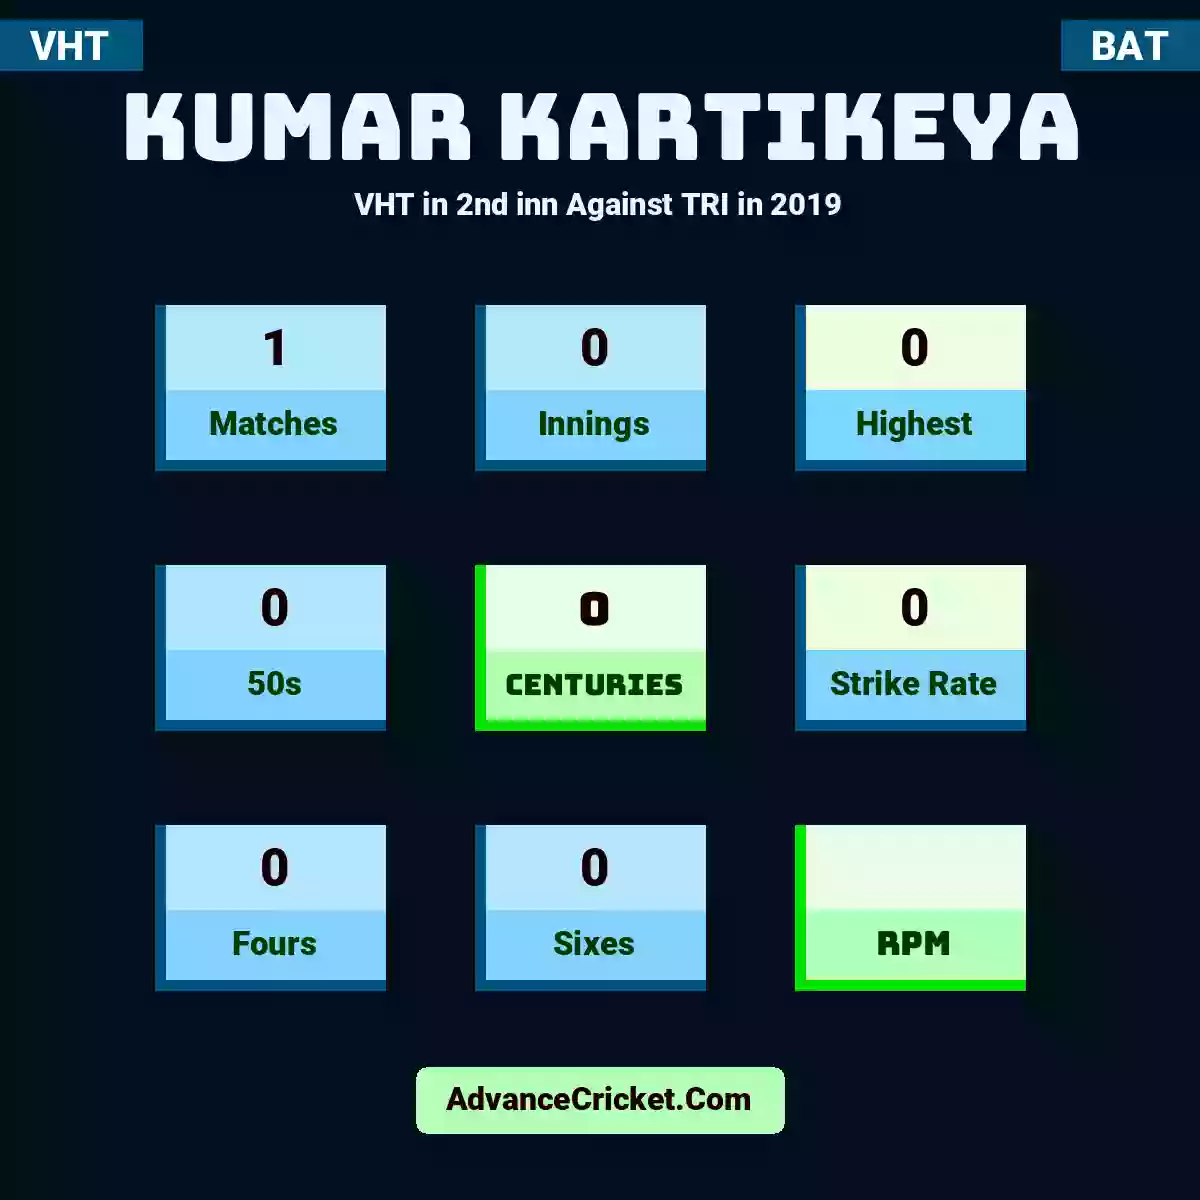 Kumar Kartikeya VHT  in 2nd inn Against TRI in 2019, Kumar Kartikeya played 1 matches, scored 0 runs as highest, 0 half-centuries, and 0 centuries, with a strike rate of 0. K.Kartikeya hit 0 fours and 0 sixes.